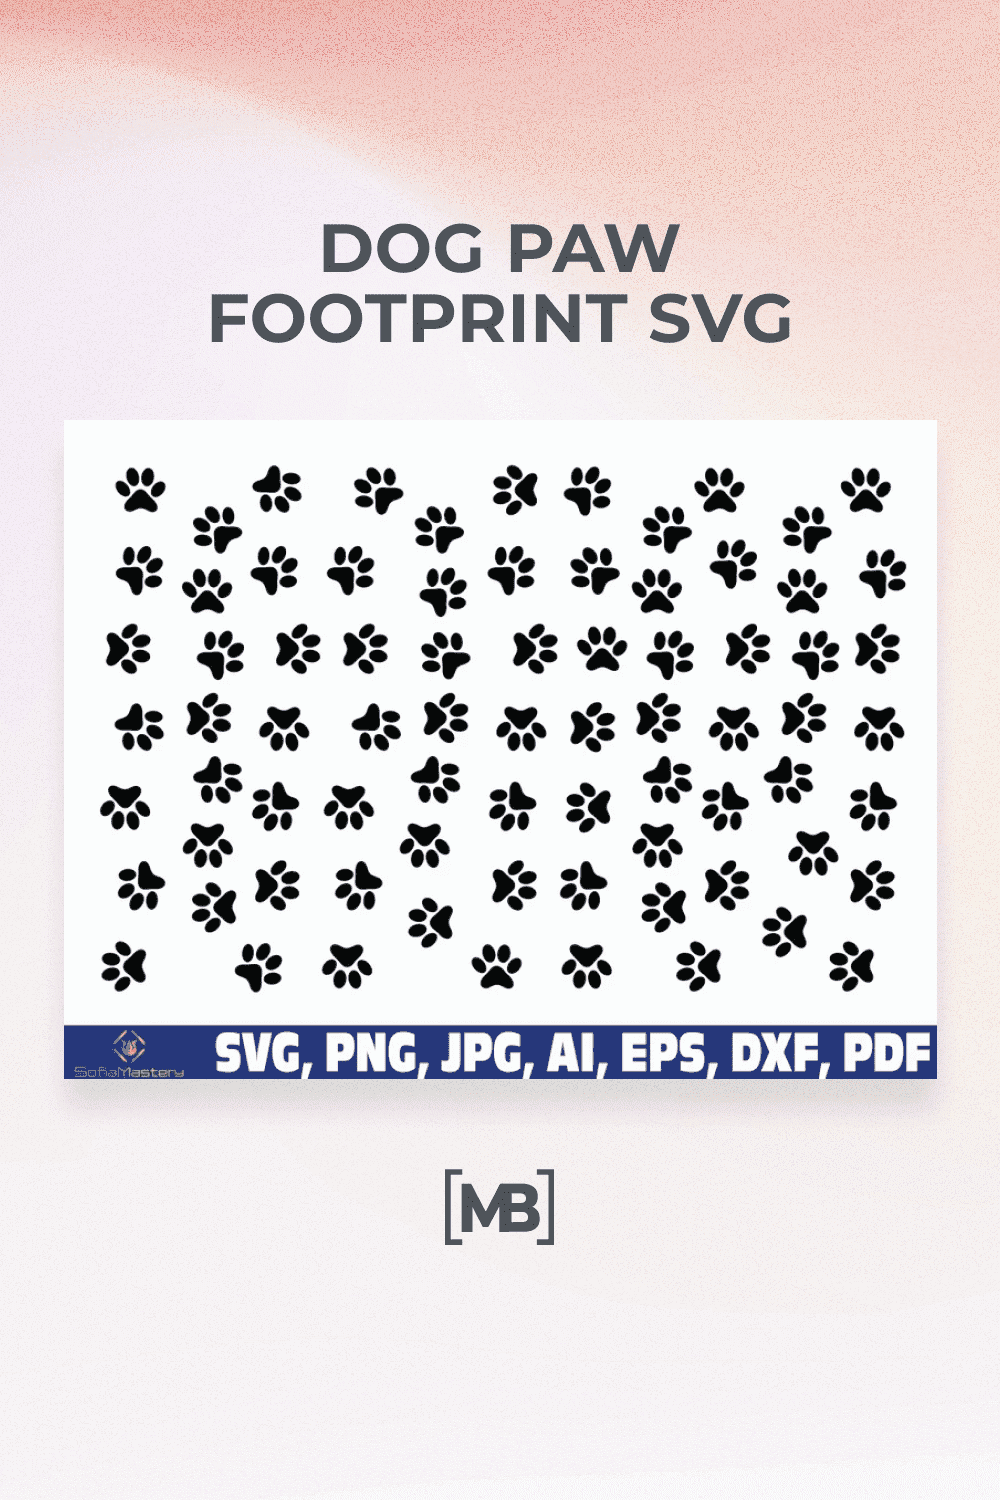 Dog paw footprint svg.